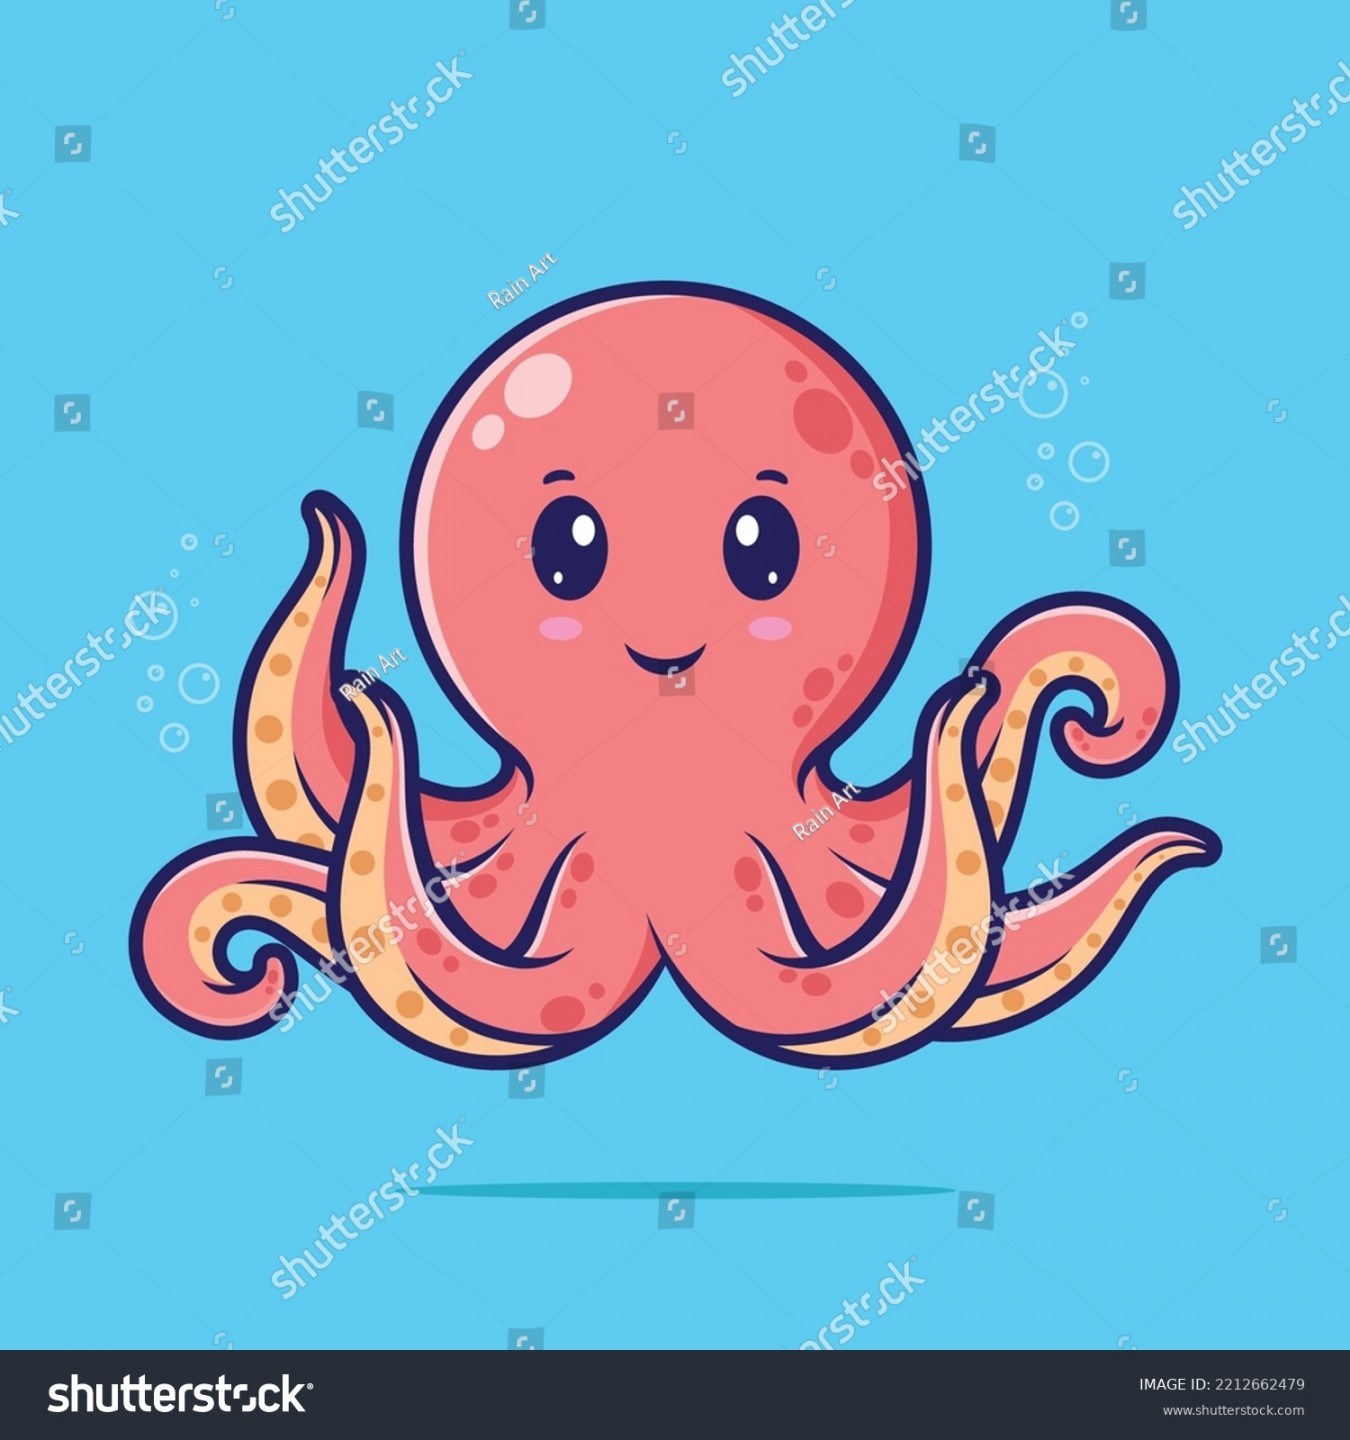 Cute baby octopus cartoine Vektorgrafik: Stock-Vektorgrafik